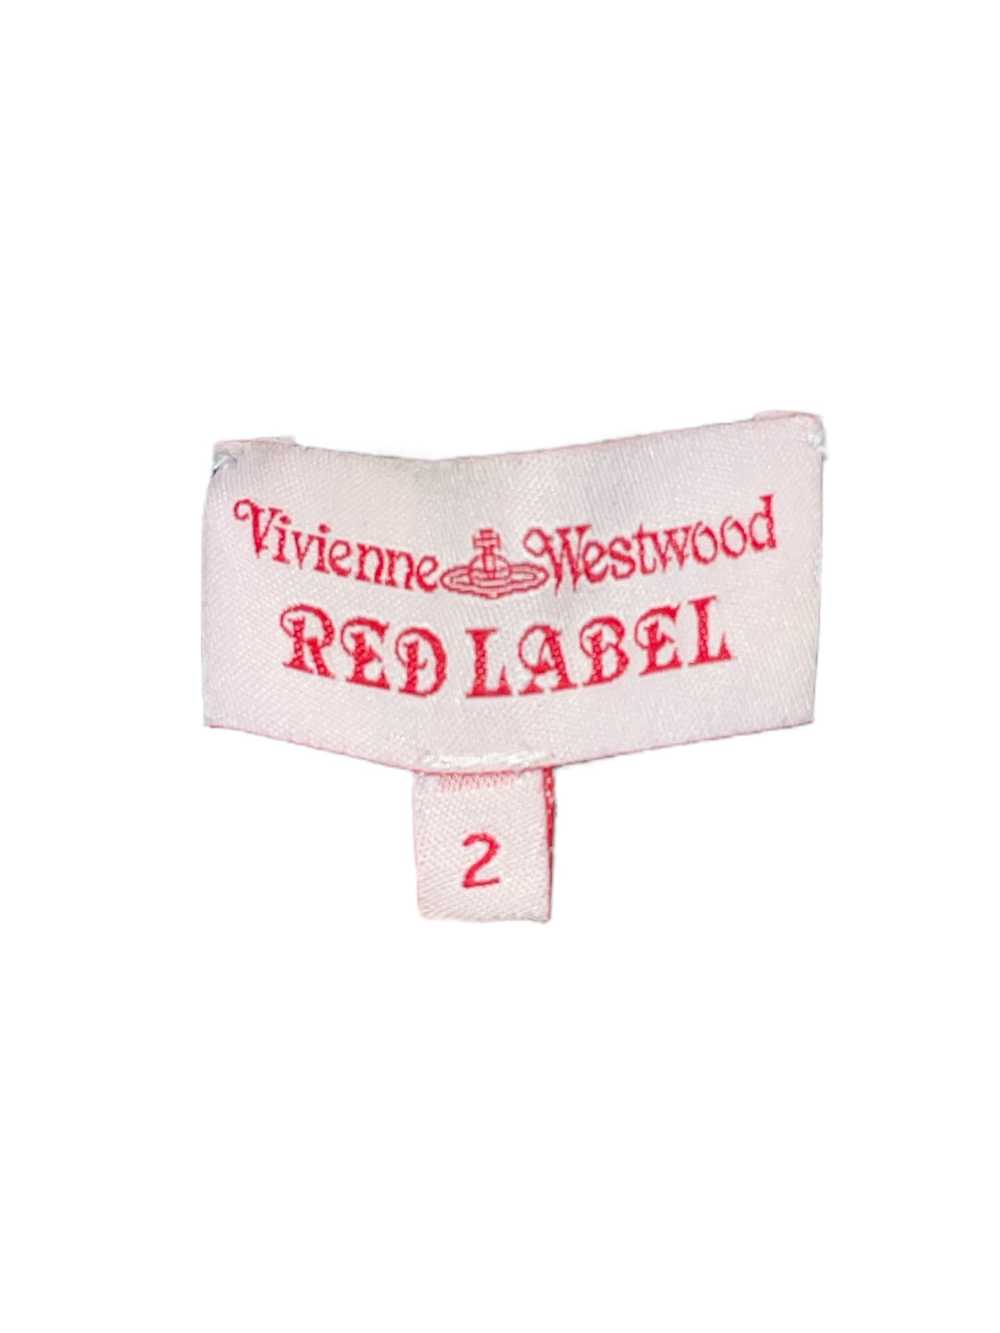 Vivienne Westwood RED LABEL///T-Shirt/2/Graphic/C… - image 3